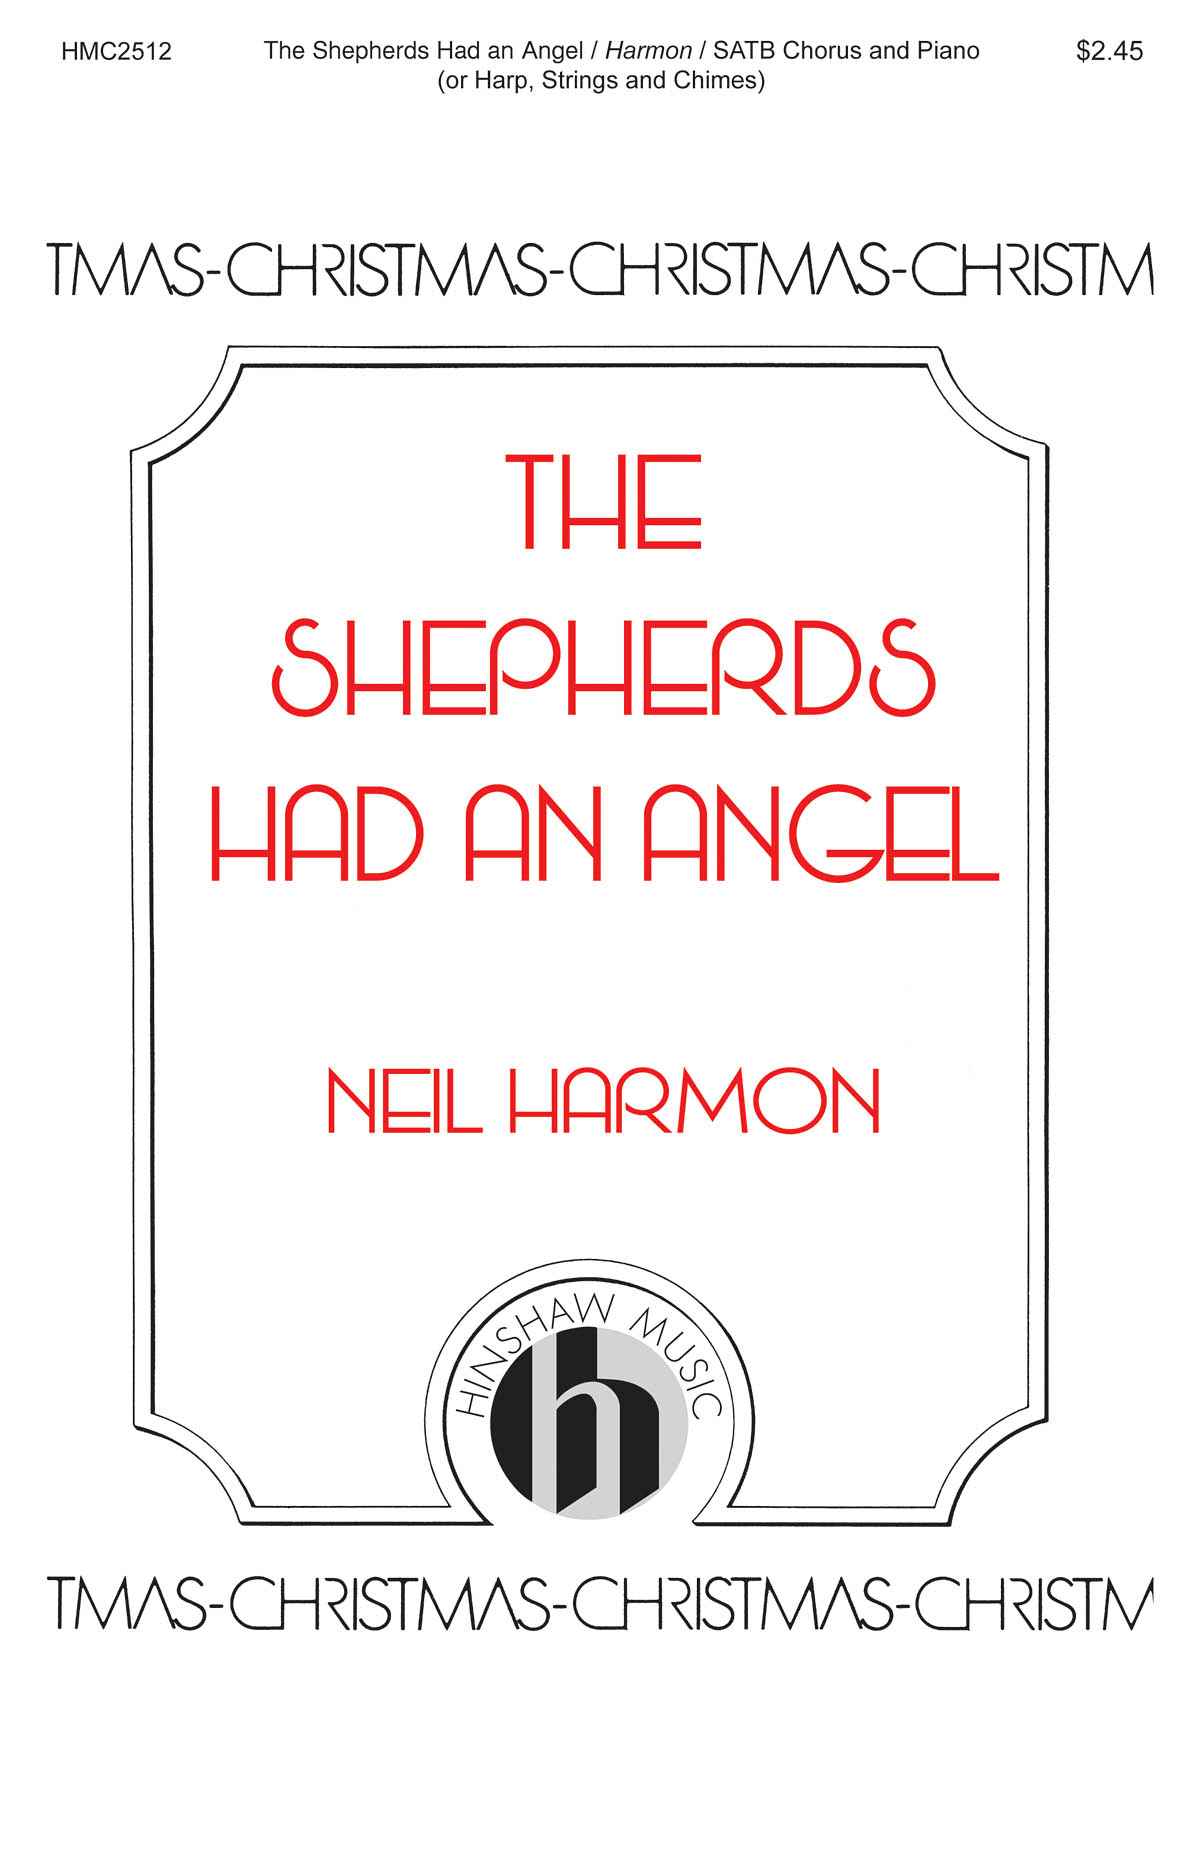 Neil Harmon: The Shepherds Had An Angel (SATB)